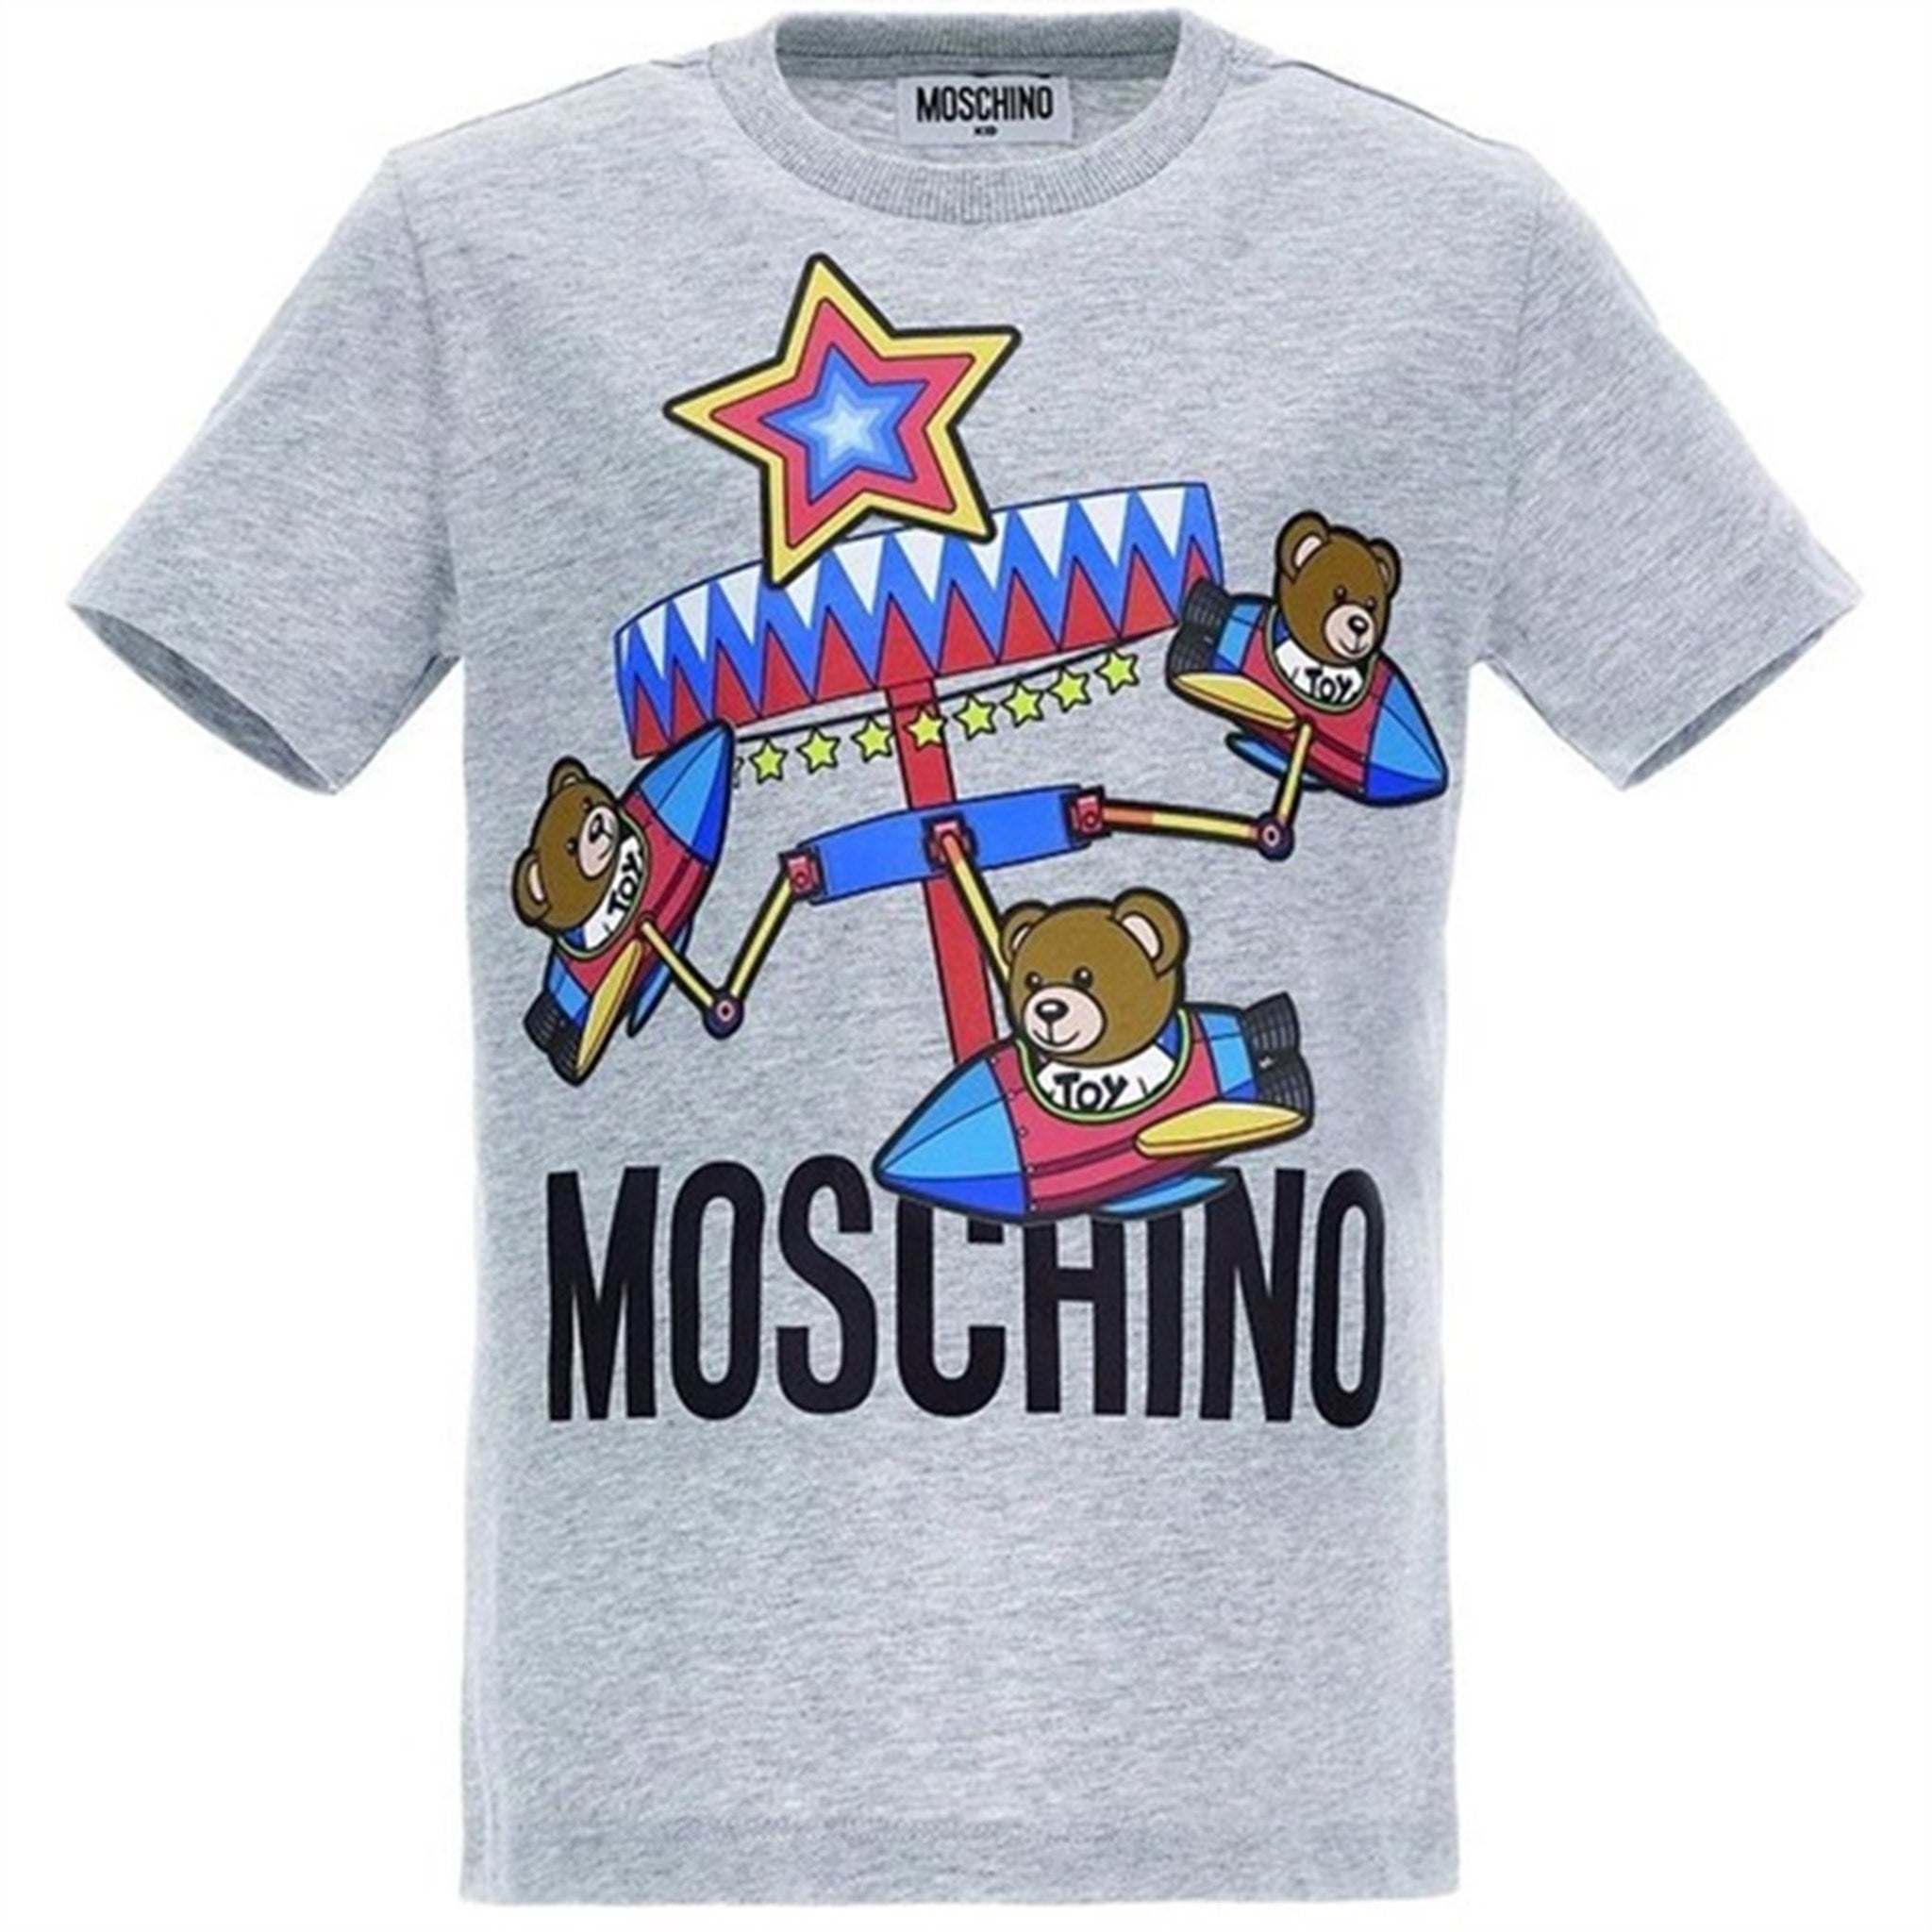 Moschino Grey T-Shirt